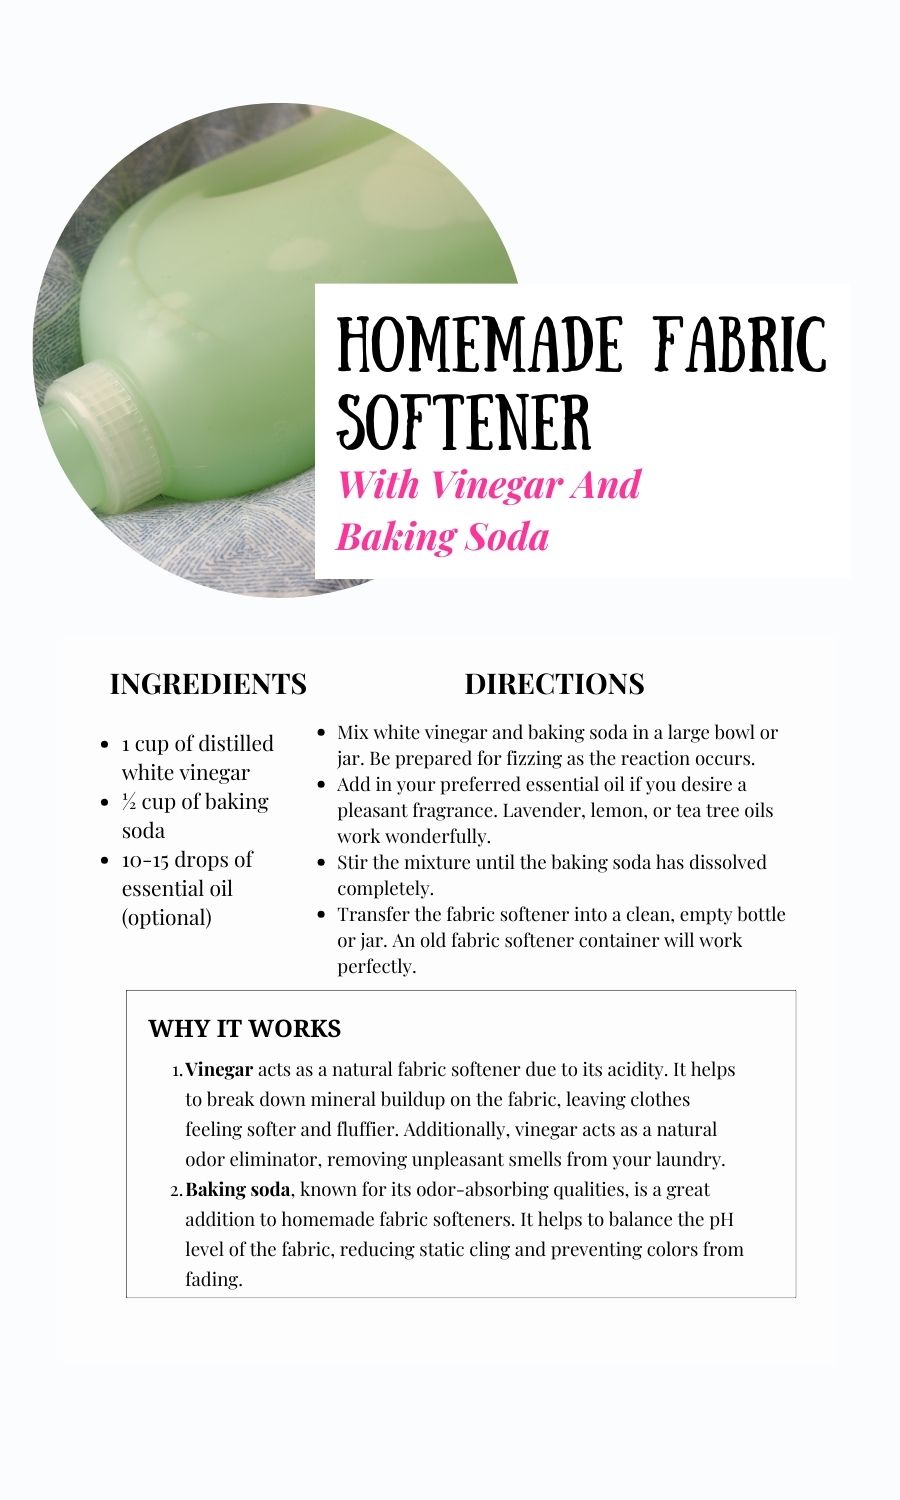 Homemade Fabric Softener With Vinegar And Baking Soda